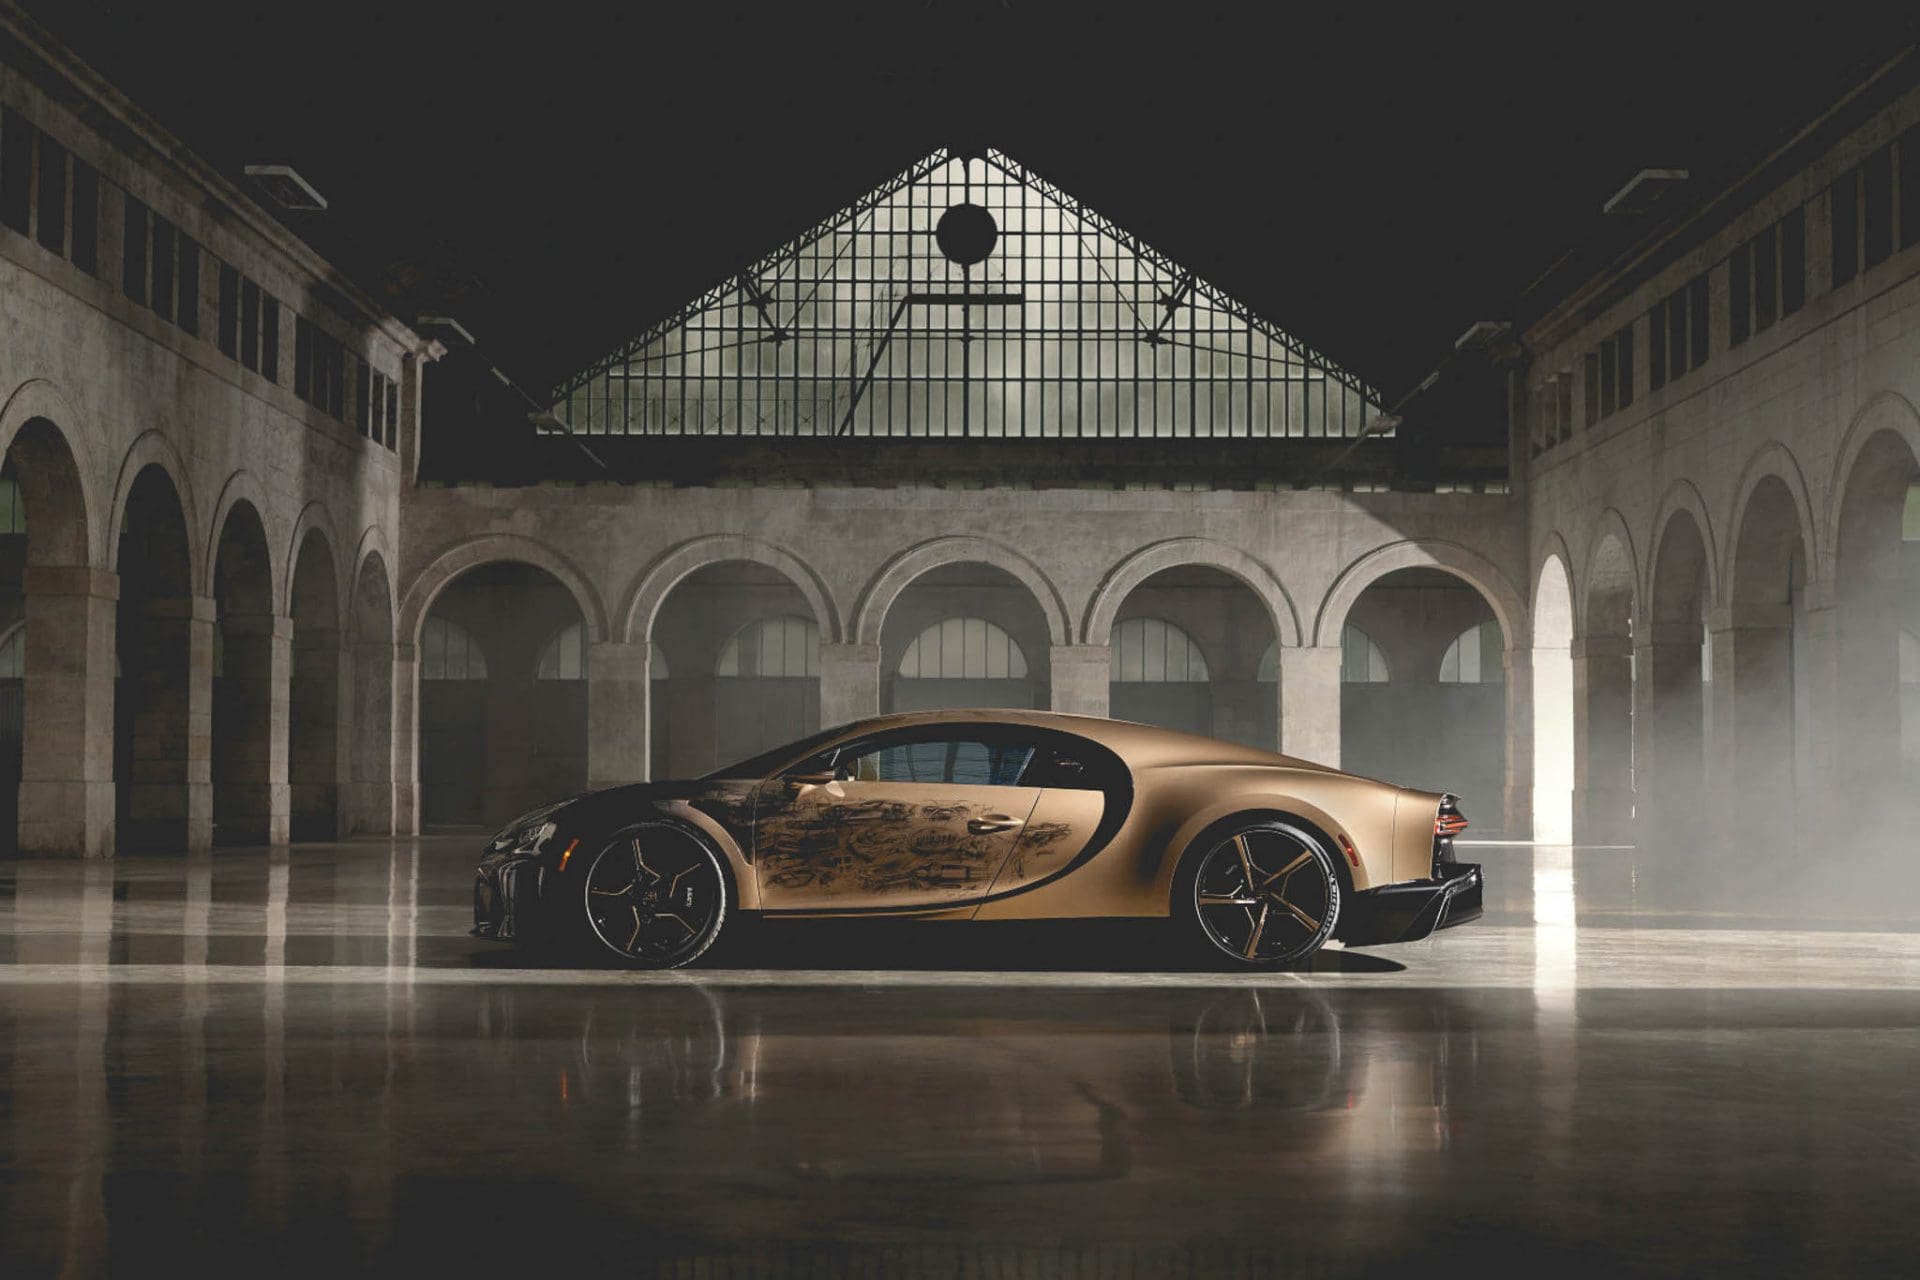 Golden Era, <strong>Bugatti Chiron</strong> gets a golden edge with ‘Super Sport Golden Era'” width=”1140″ height=”760″ srcset=”https://www.manify.nl/wp-content/uploads/2023/08/02-BUGATTI-CSS -Golden-Era-1920×1280.jpg 1920w, https://www.manify.nl/wp-content/uploads/2023/08/02-BUGATTI-CSS-Golden-Era-300×200.jpg 300w, https://www .manify.nl/wp-content/uploads/2023/08/02-BUGATTI-CSS-Golden-Era-1024×683.jpg 1024w, https://www.manify.nl/wp-content/uploads/2023/08/ 02-BUGATTI-CSS-Golden-Era-600×400.jpg 600w, https://www.manify.nl/wp-content/uploads/2023/08/02-BUGATTI-CSS-Golden-Era.jpg 2048w” data- sizes=”(max-width: 1140px) 100vw, 1140px” bad-src=”data:image/gif;base64,R0lGODlhAQABAAAAACH5BAEKAAEALAAAAAABAAEAAAICTAEAOw==”/> <strong>Bugatti Chiron</strong> gets a golden edge with ‘Super Sport Golden Era'” width=”1140″ height=”760″ srcset=”https://www.manify.nl/wp-content/uploads/2023/08/02-BUGATTI-CSS -Golden-Era-1920×1280.jpg 1920w, https://www.manify.nl/wp-content/uploads/2023/08/02-BUGATTI-CSS-Golden-Era-300×200.jpg 300w, https://www .manify.nl/wp-content/uploads/2023/08/02-BUGATTI-CSS-Golden-Era-1024×683.jpg 1024w, https://www.manify.nl/wp-content/uploads/2023/08/ 02-BUGATTI-CSS-Golden-Era-600×400.jpg 600w, https://www.manify.nl/wp-content/uploads/2023/08/02-BUGATTI-CSS-Golden-Era.jpg 2048w” sizes= “(max-width: 1140px) 100vw, 1140px”/><figcaption id=